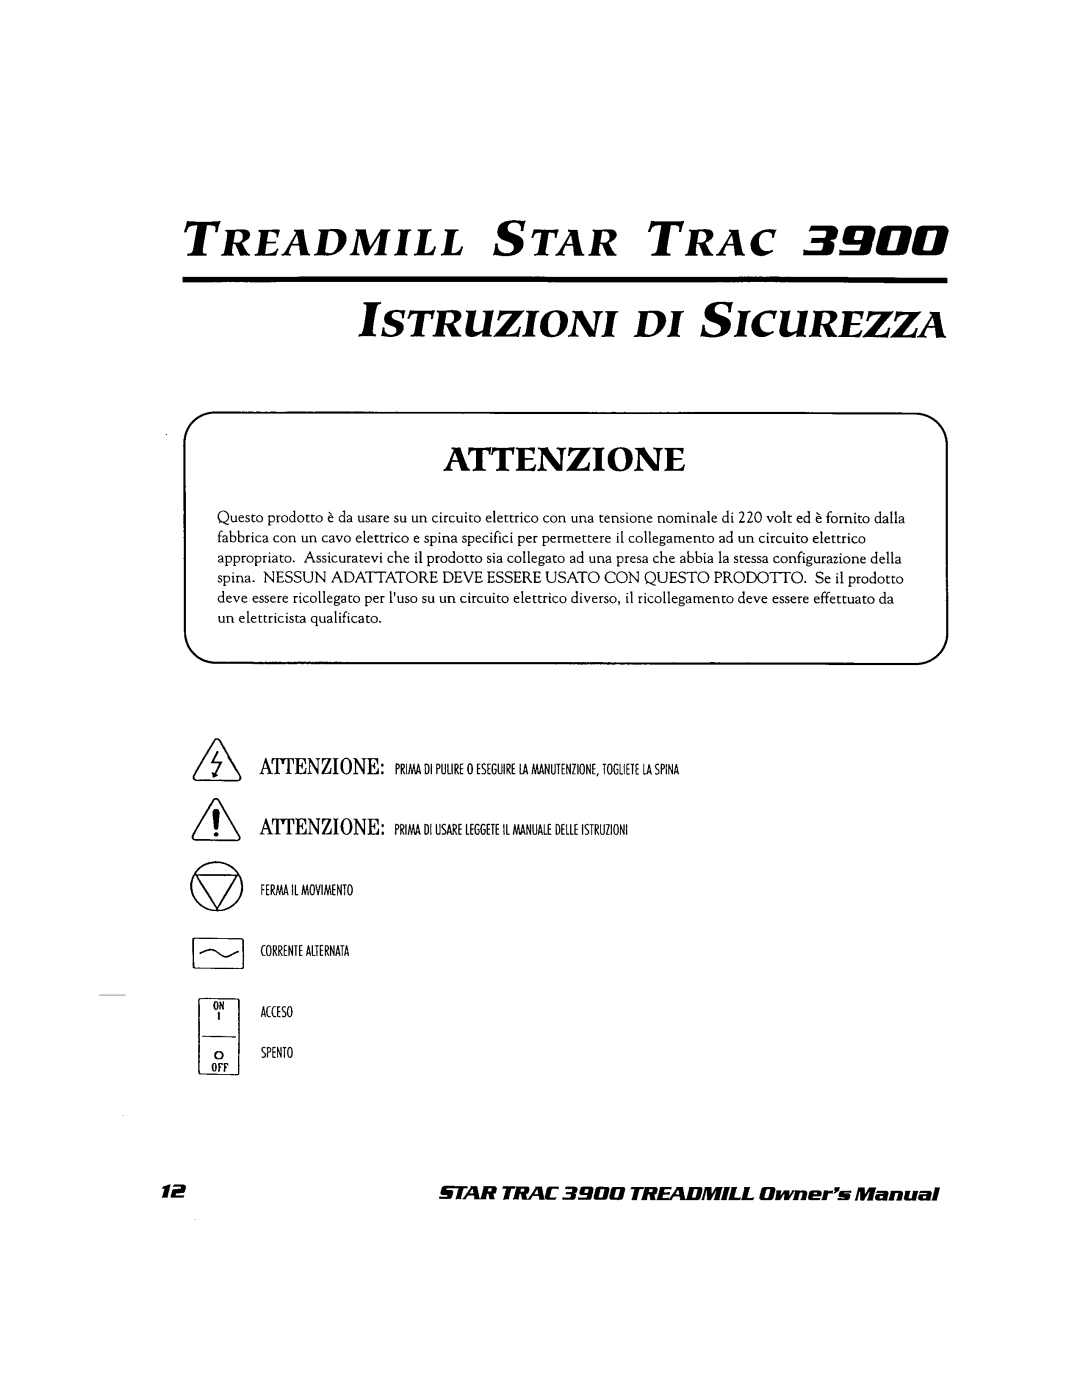 Star Trac 3900 manual 